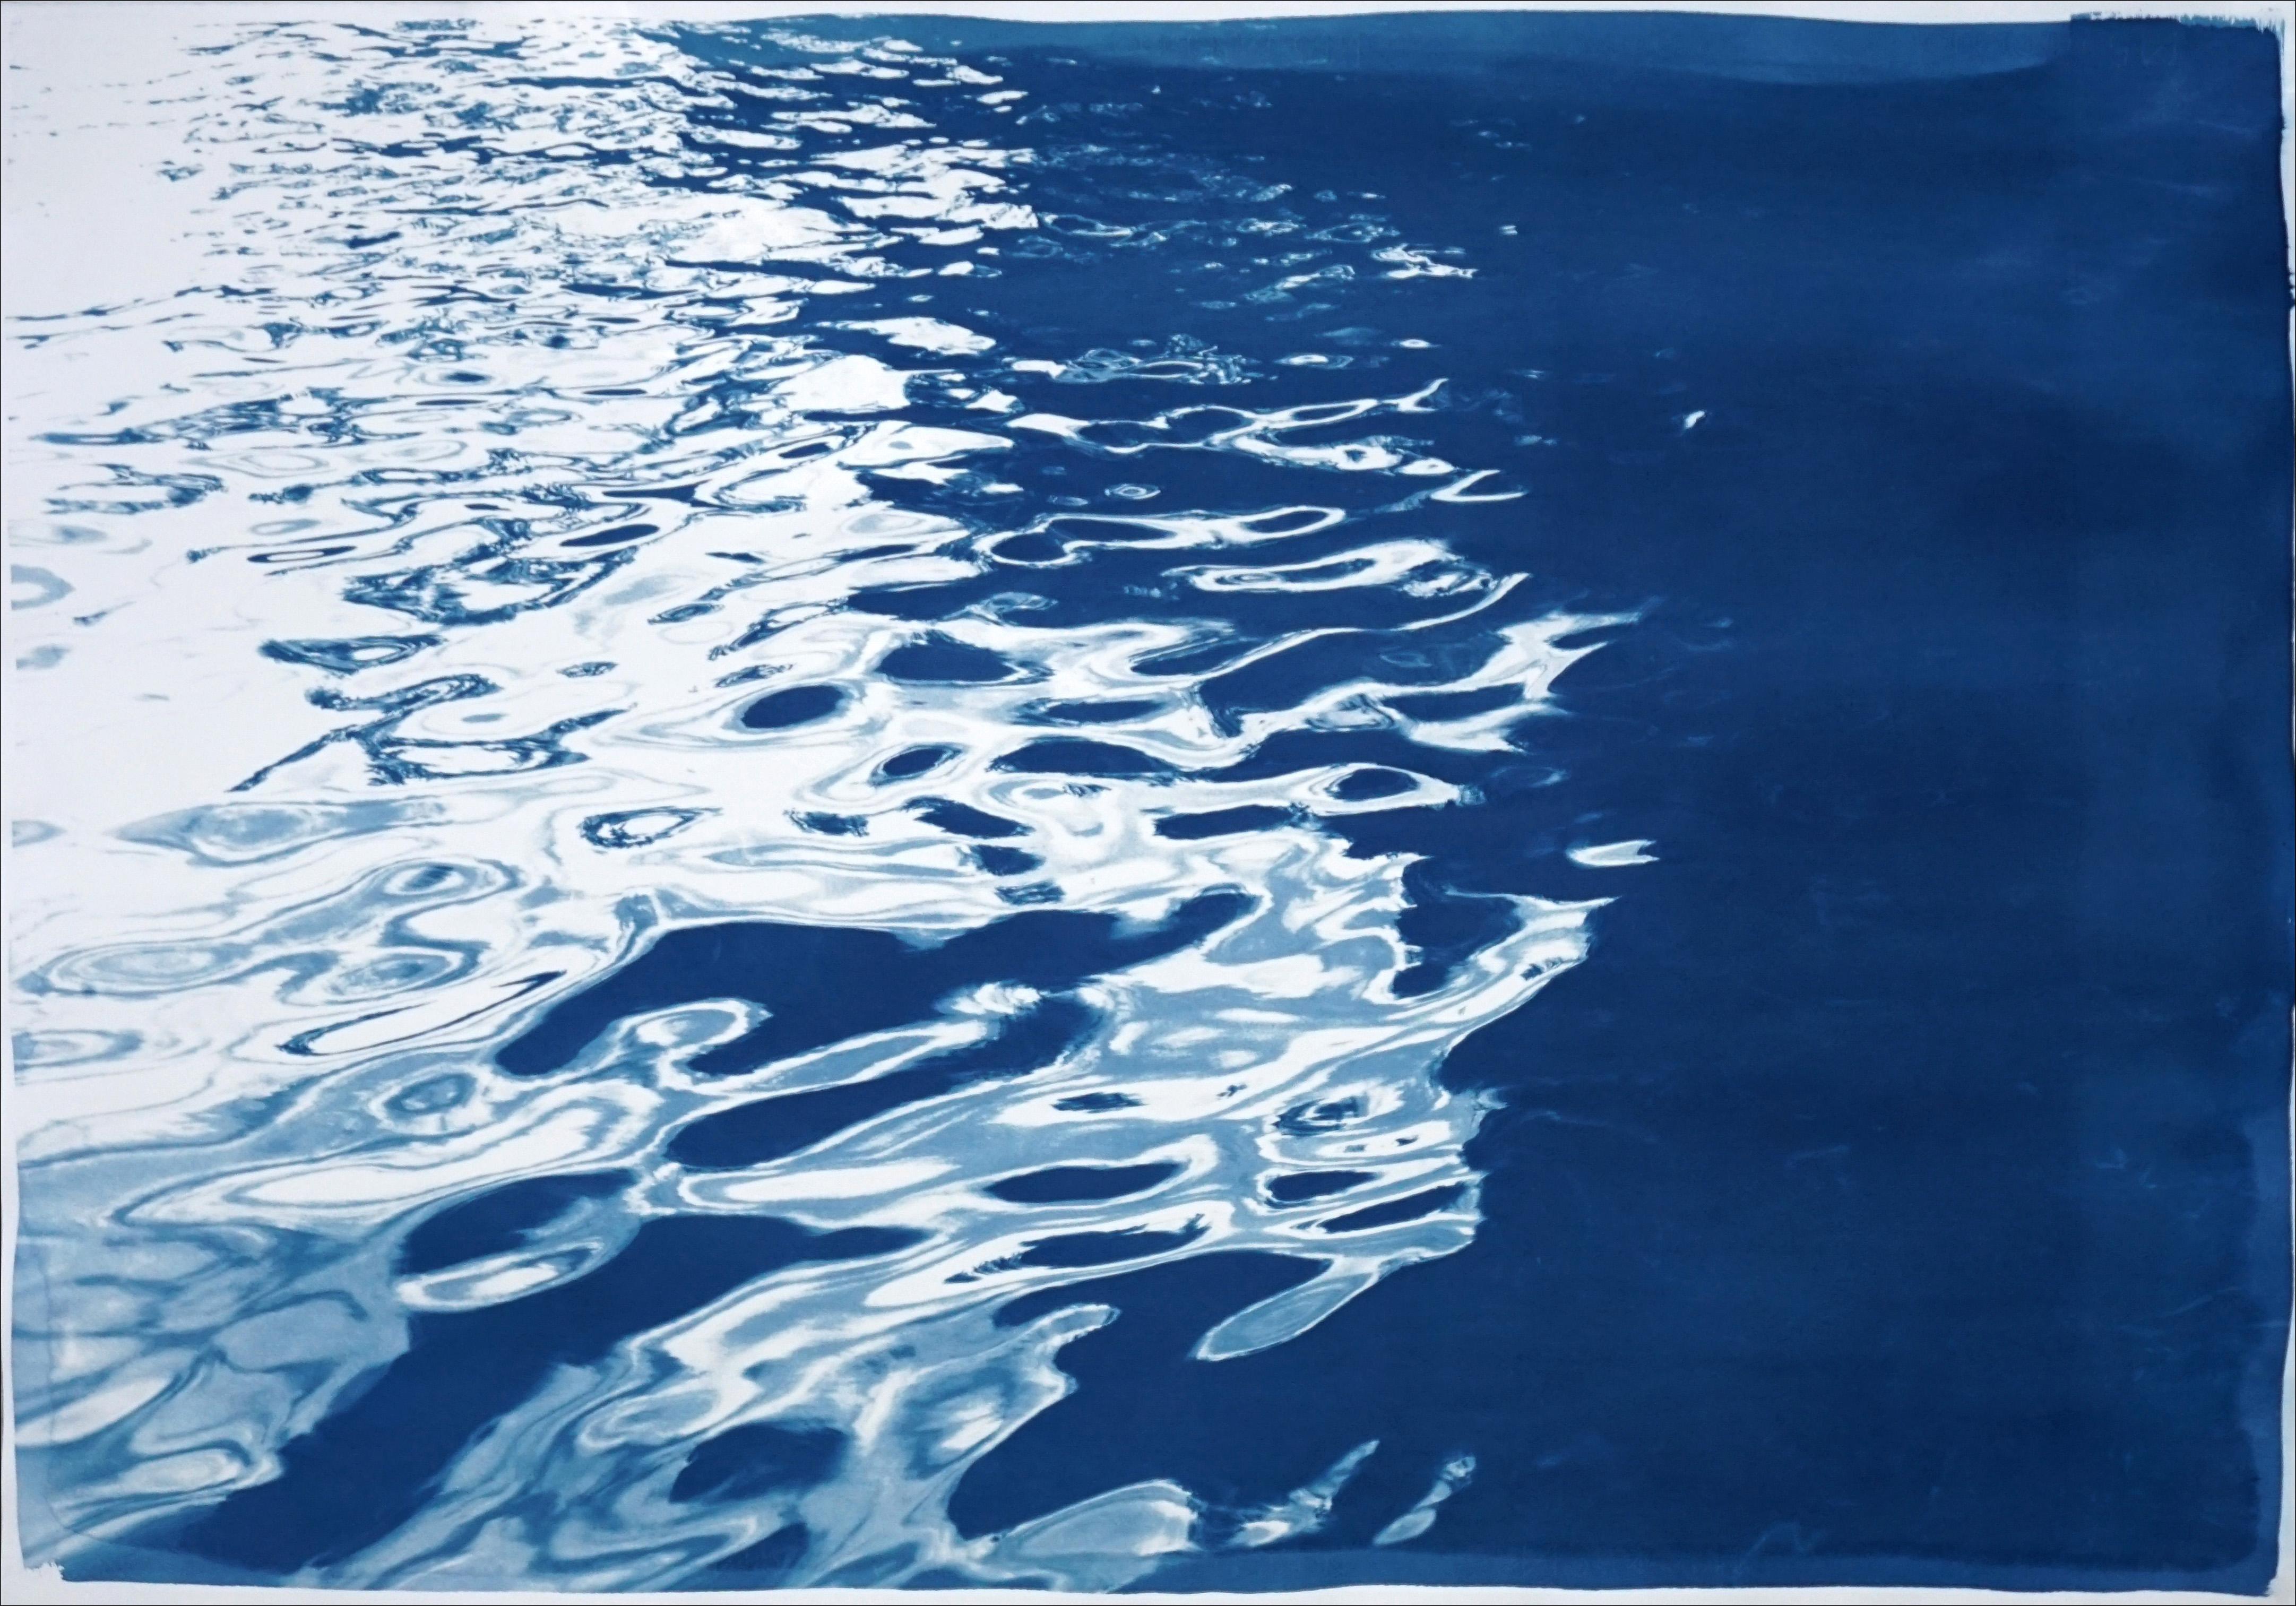 Nocturnal Seascape, Black Sea, Nautical Cyanotype Print on Paper, Deep Navy Blue